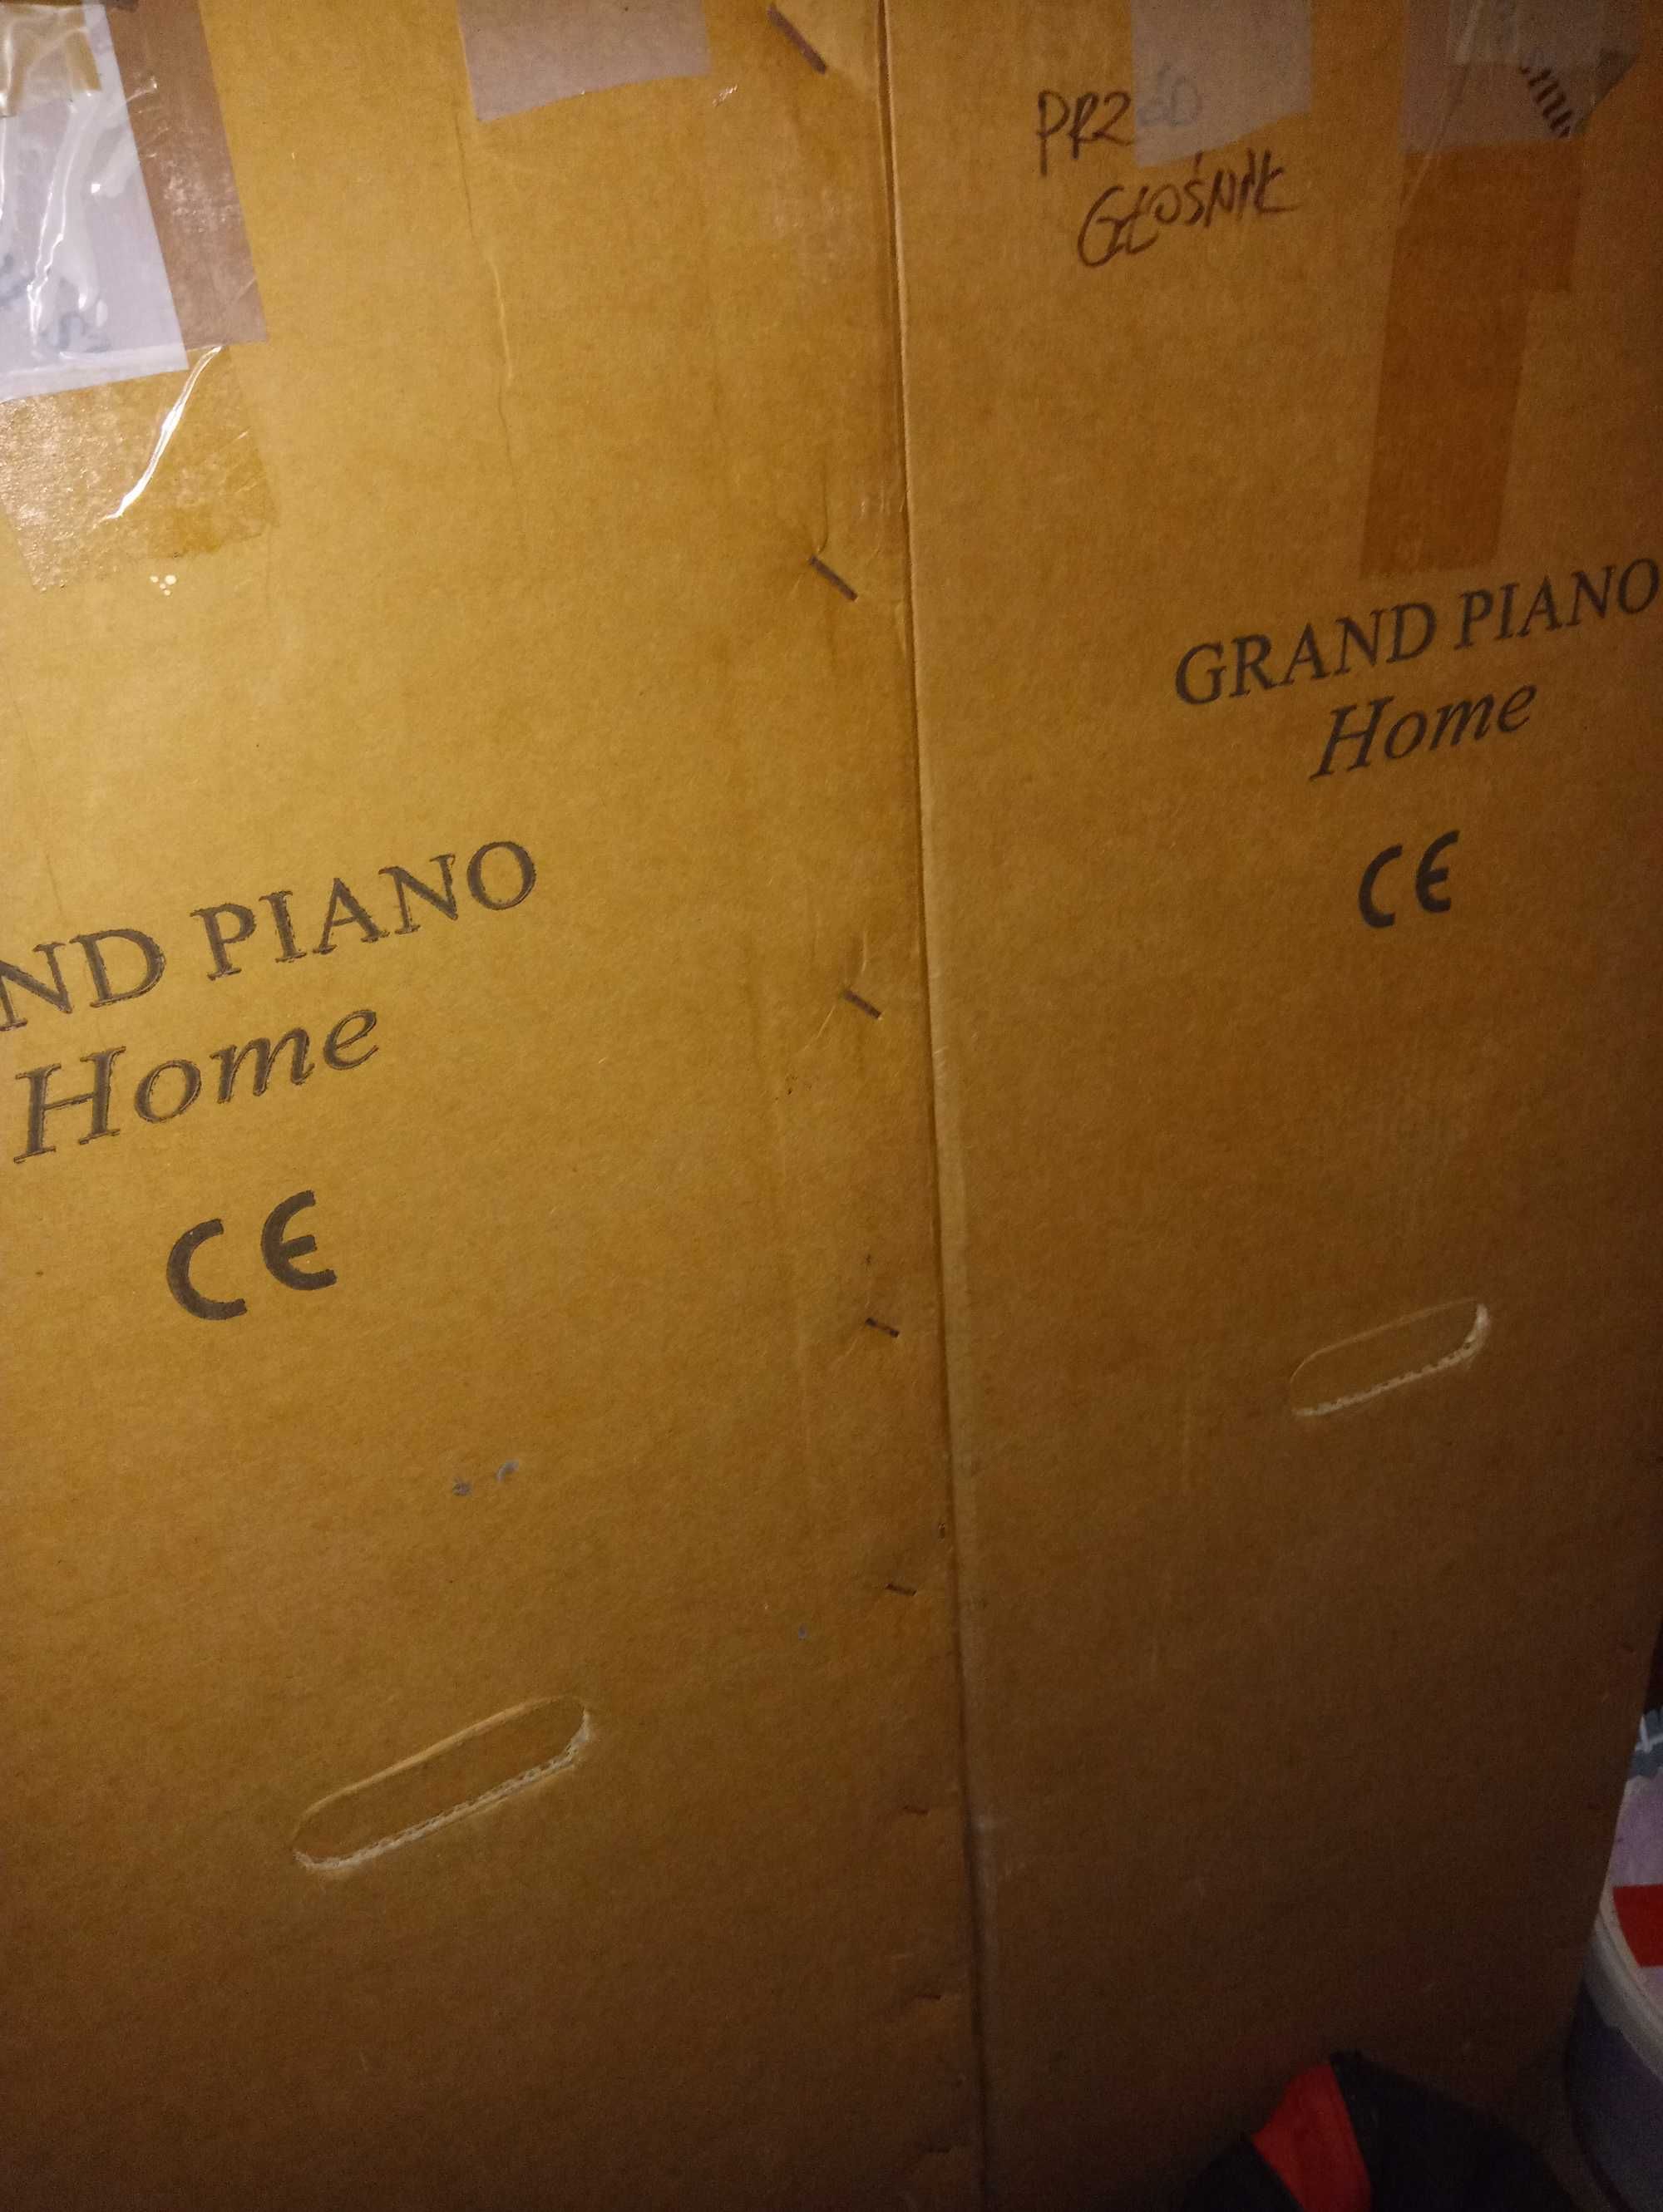 Sonus Faber Grand Piano Home !